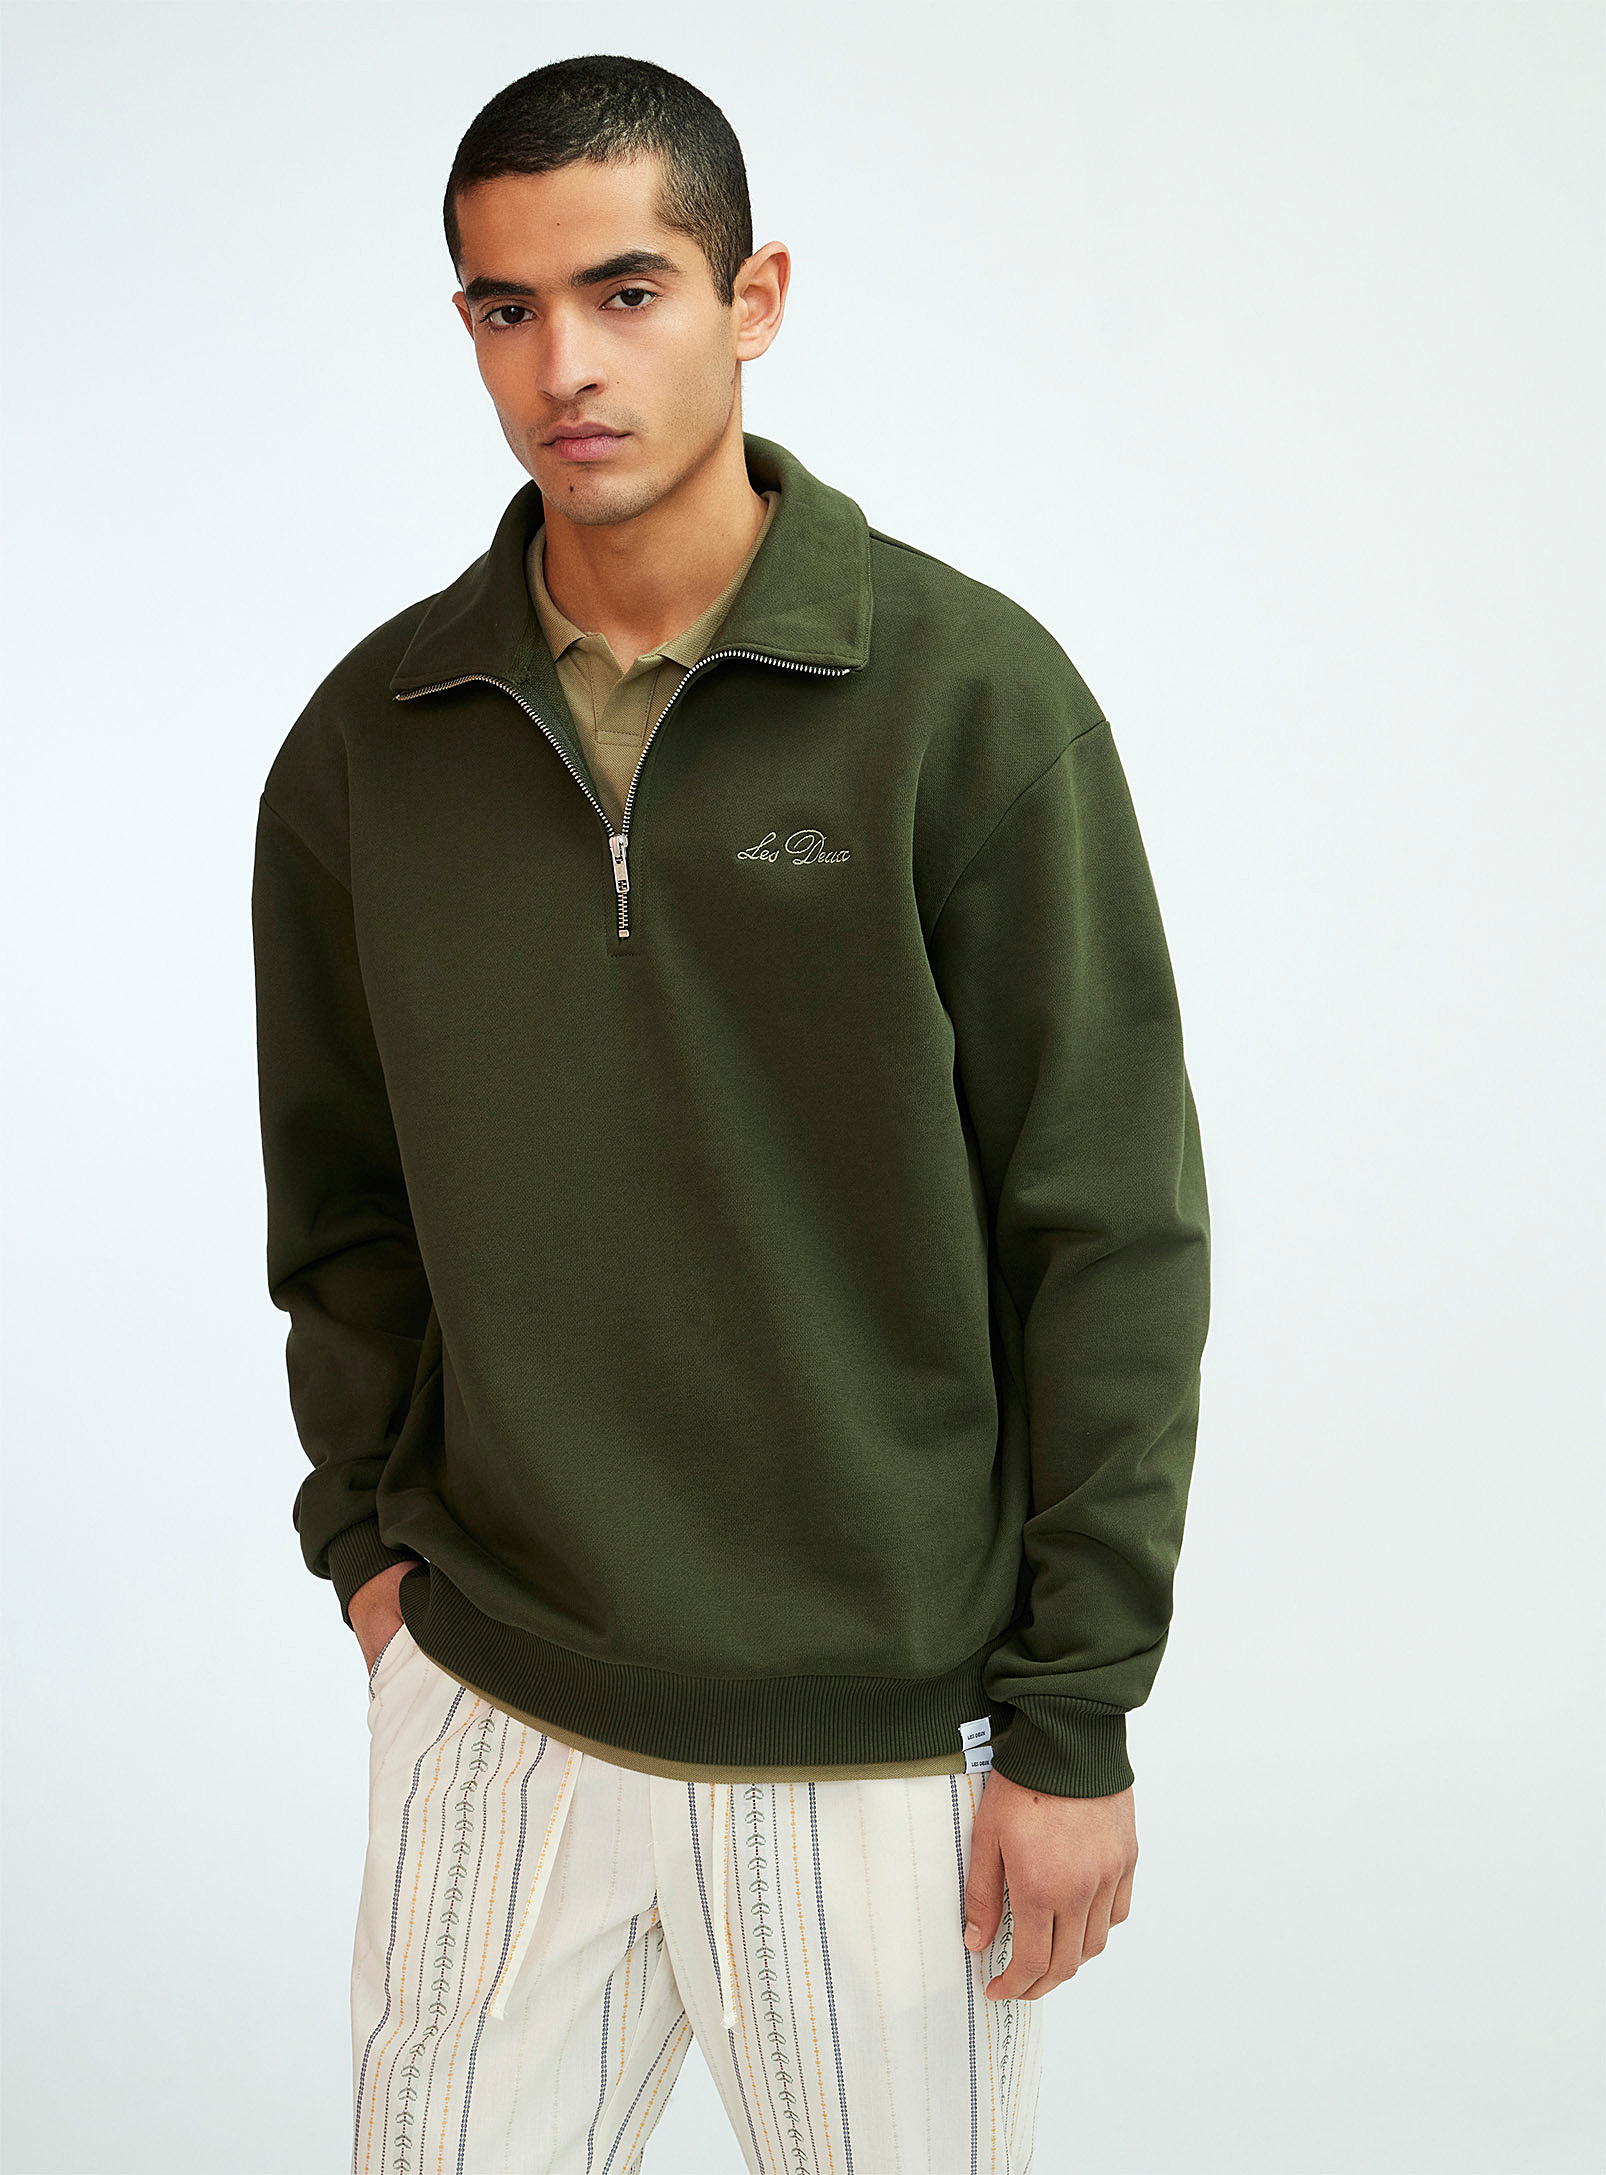 Les Deux - Men's Cursive signature zip-neck sweatshirt